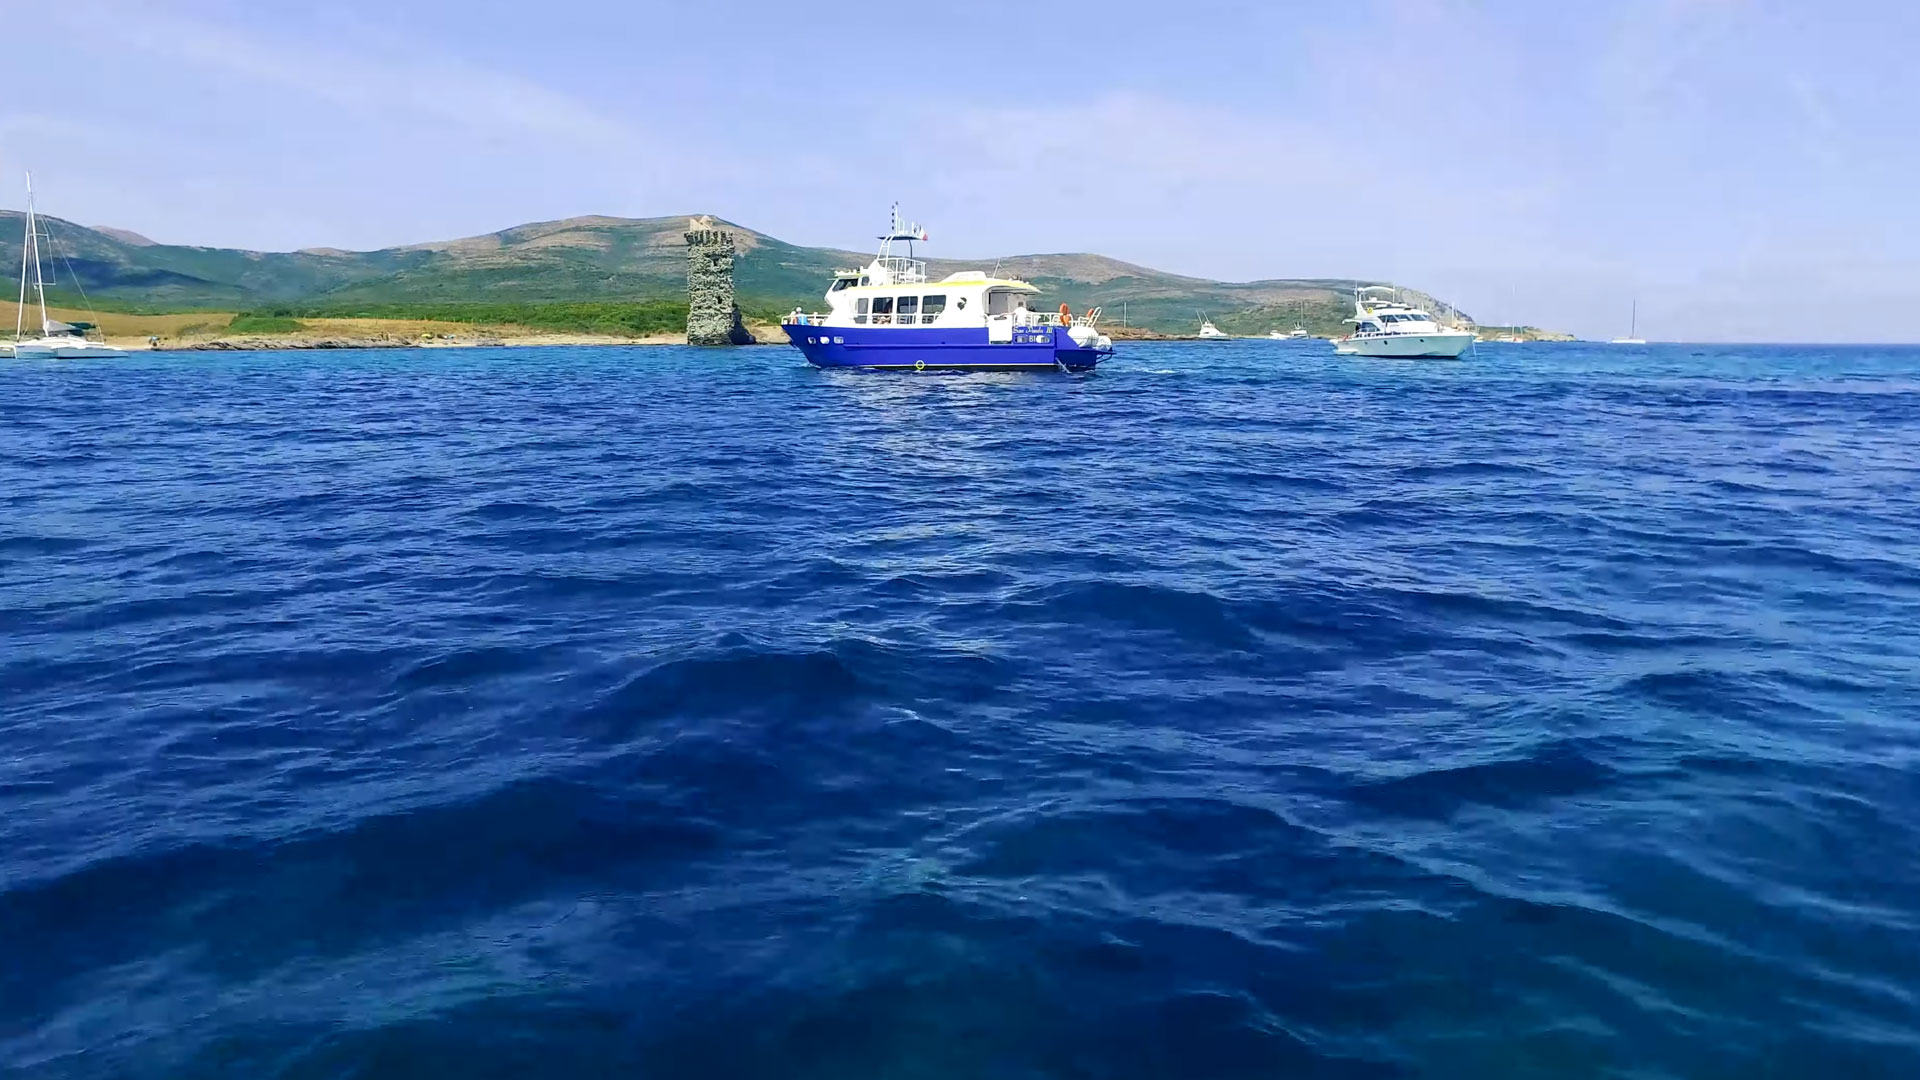 San Paulu promenades en bateau au Cap Corse